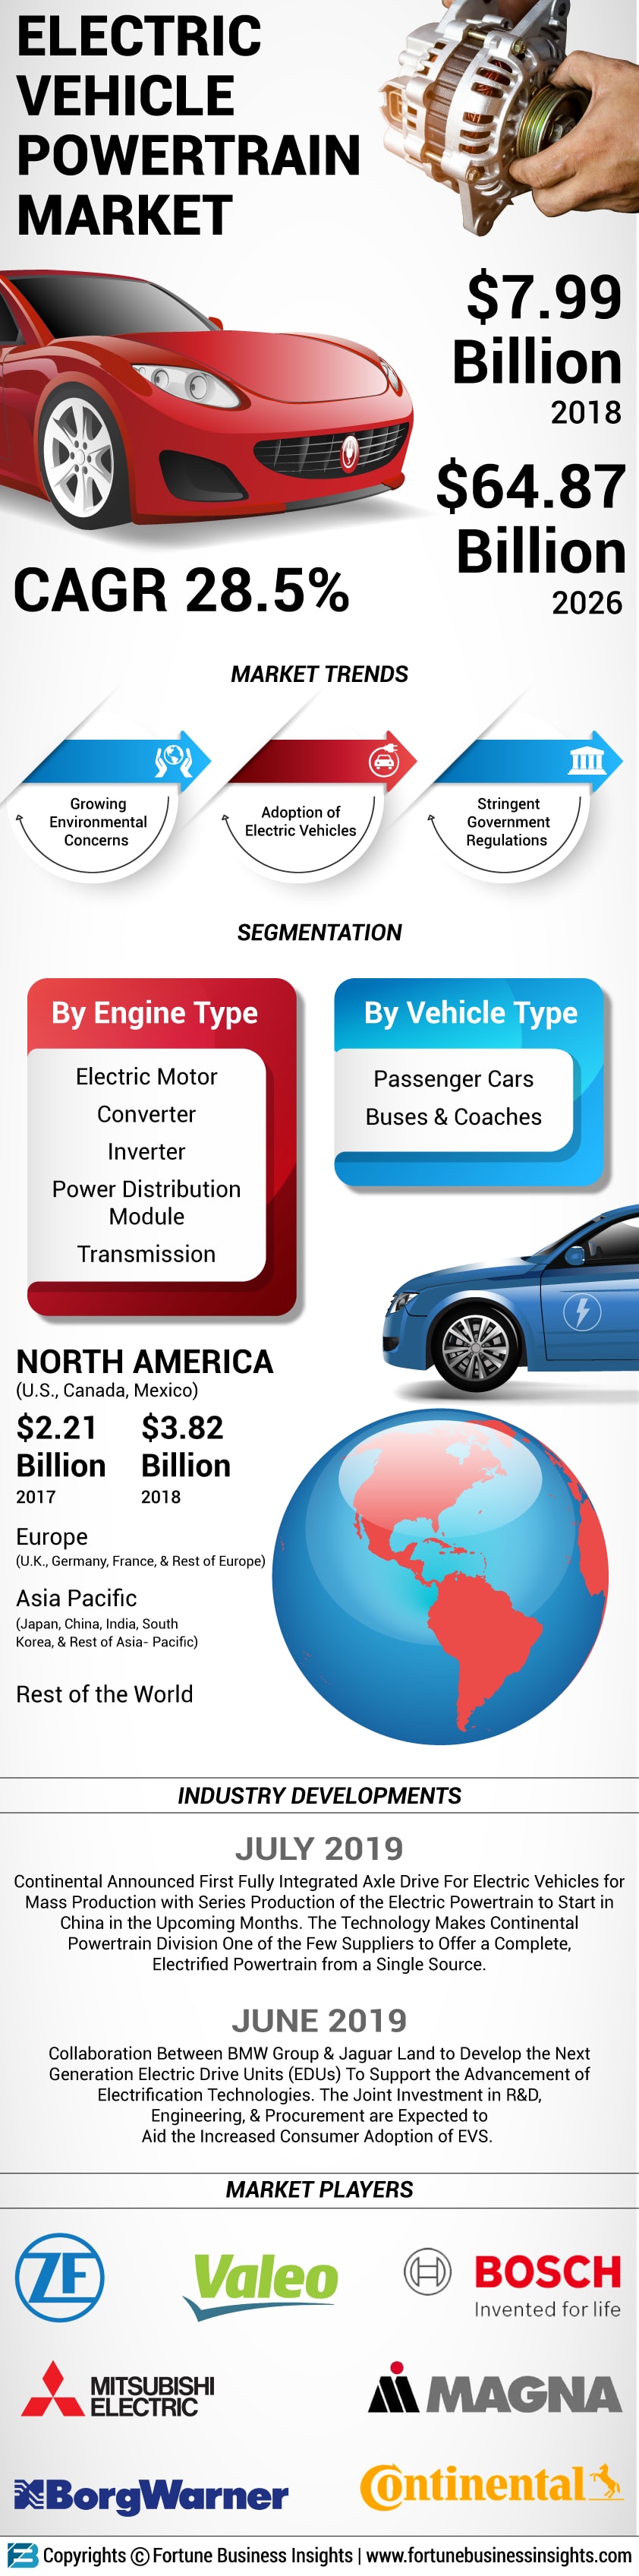 Electric Vehicle Powertrain Market